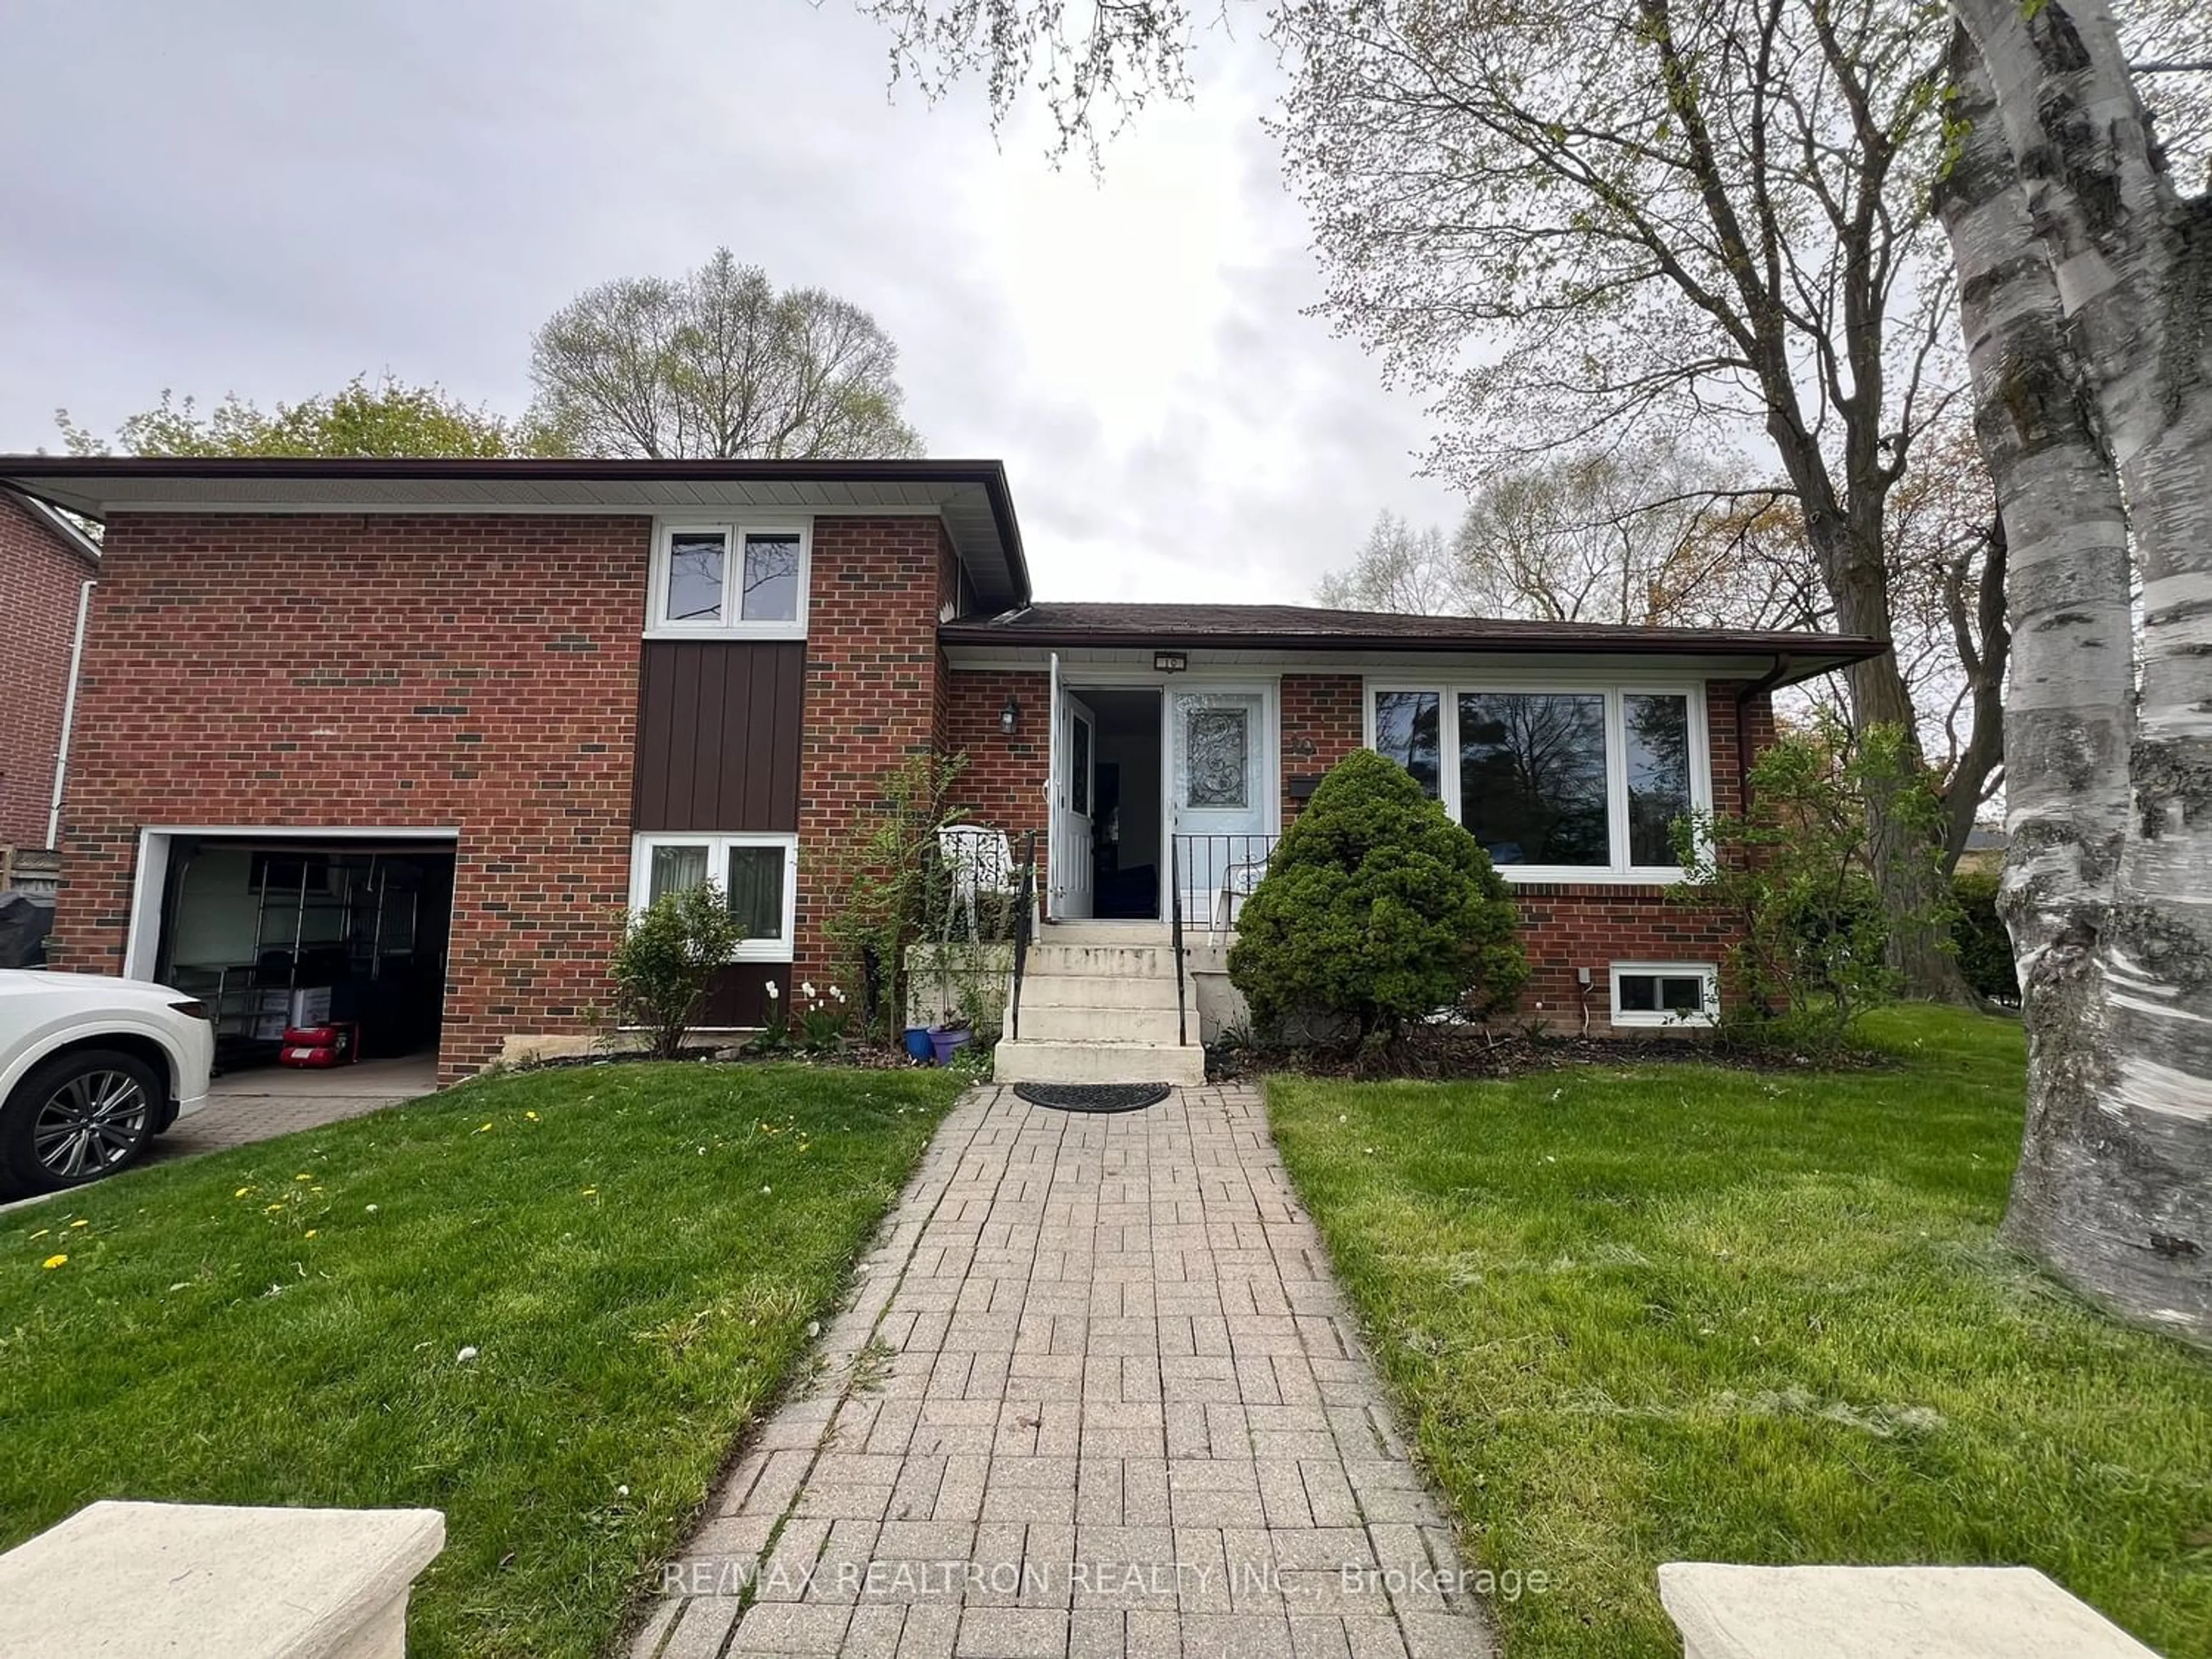 Home with brick exterior material for 10 Rowatson Rd, Toronto Ontario M1E 1K1